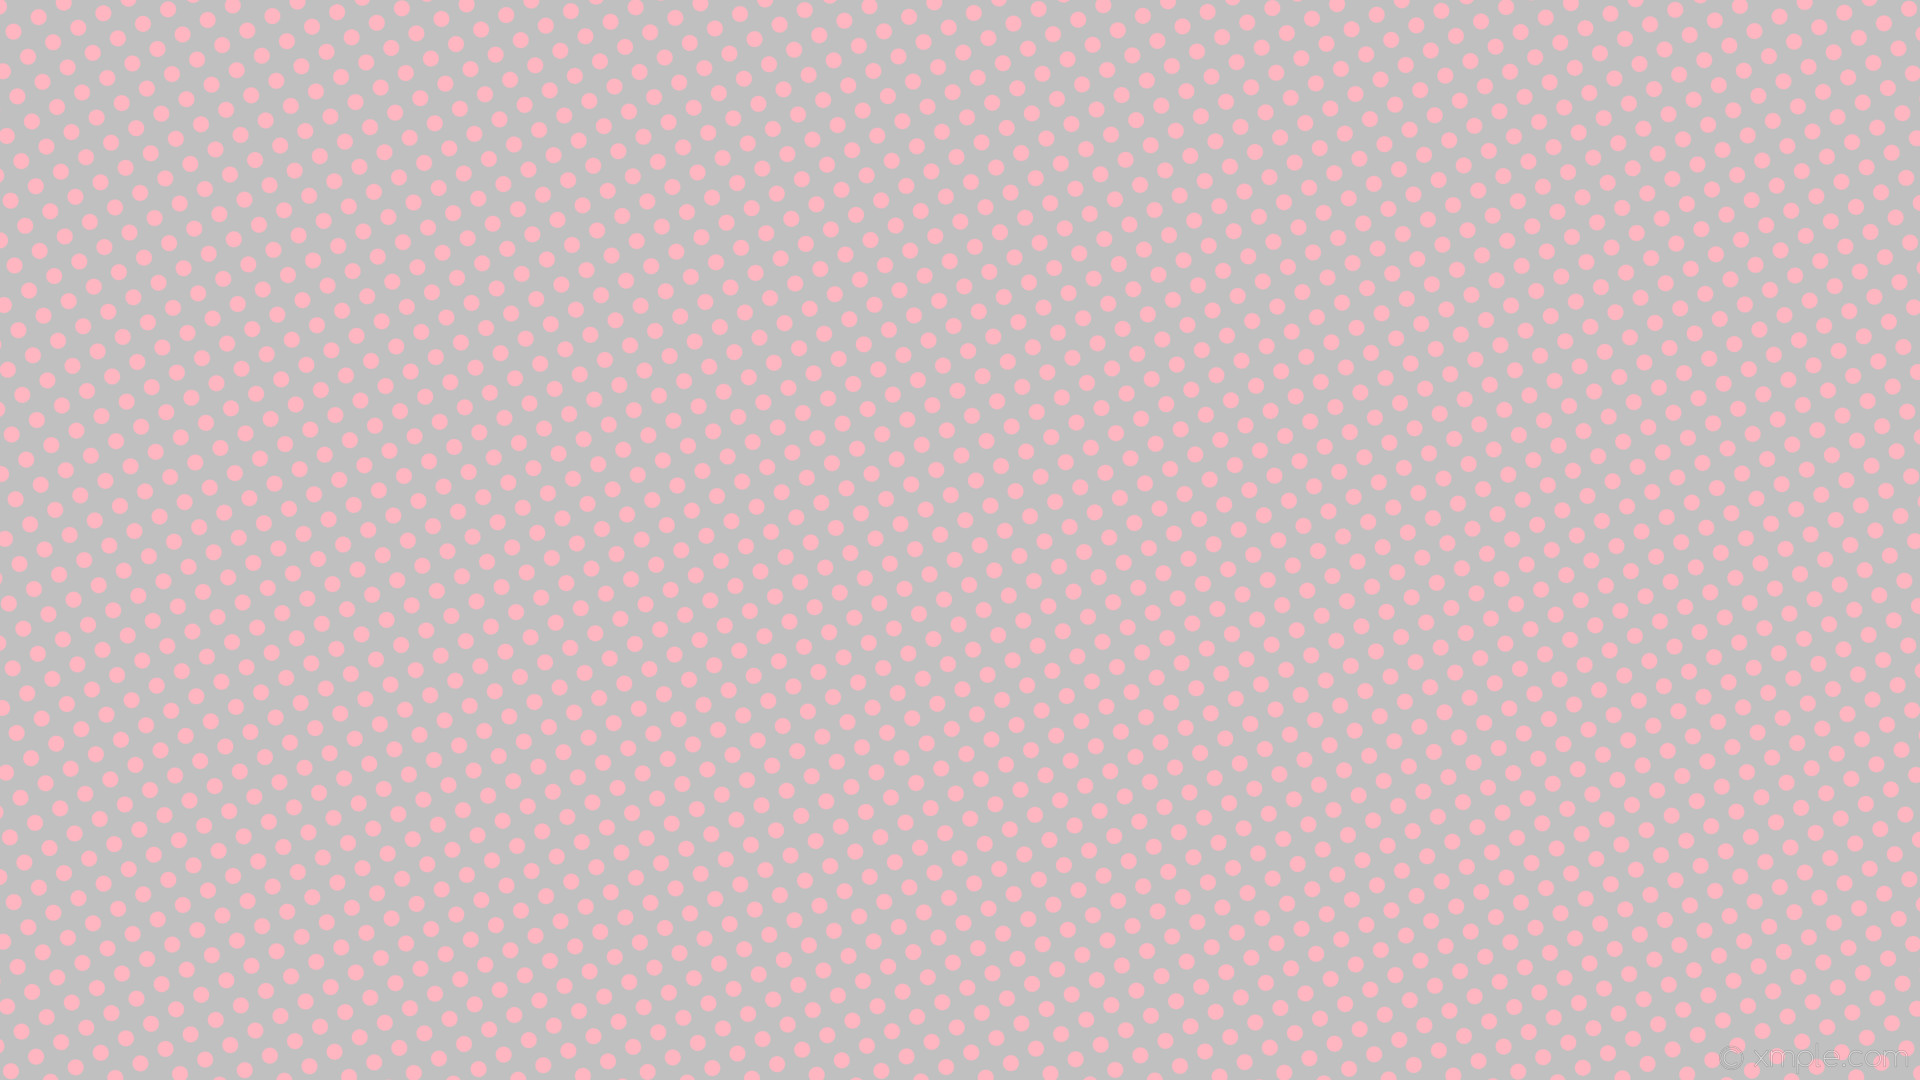 1920x1080 wallpaper polka dots spots pink grey silver light pink #c0c0c0 #ffb6c1 30Â°  16px